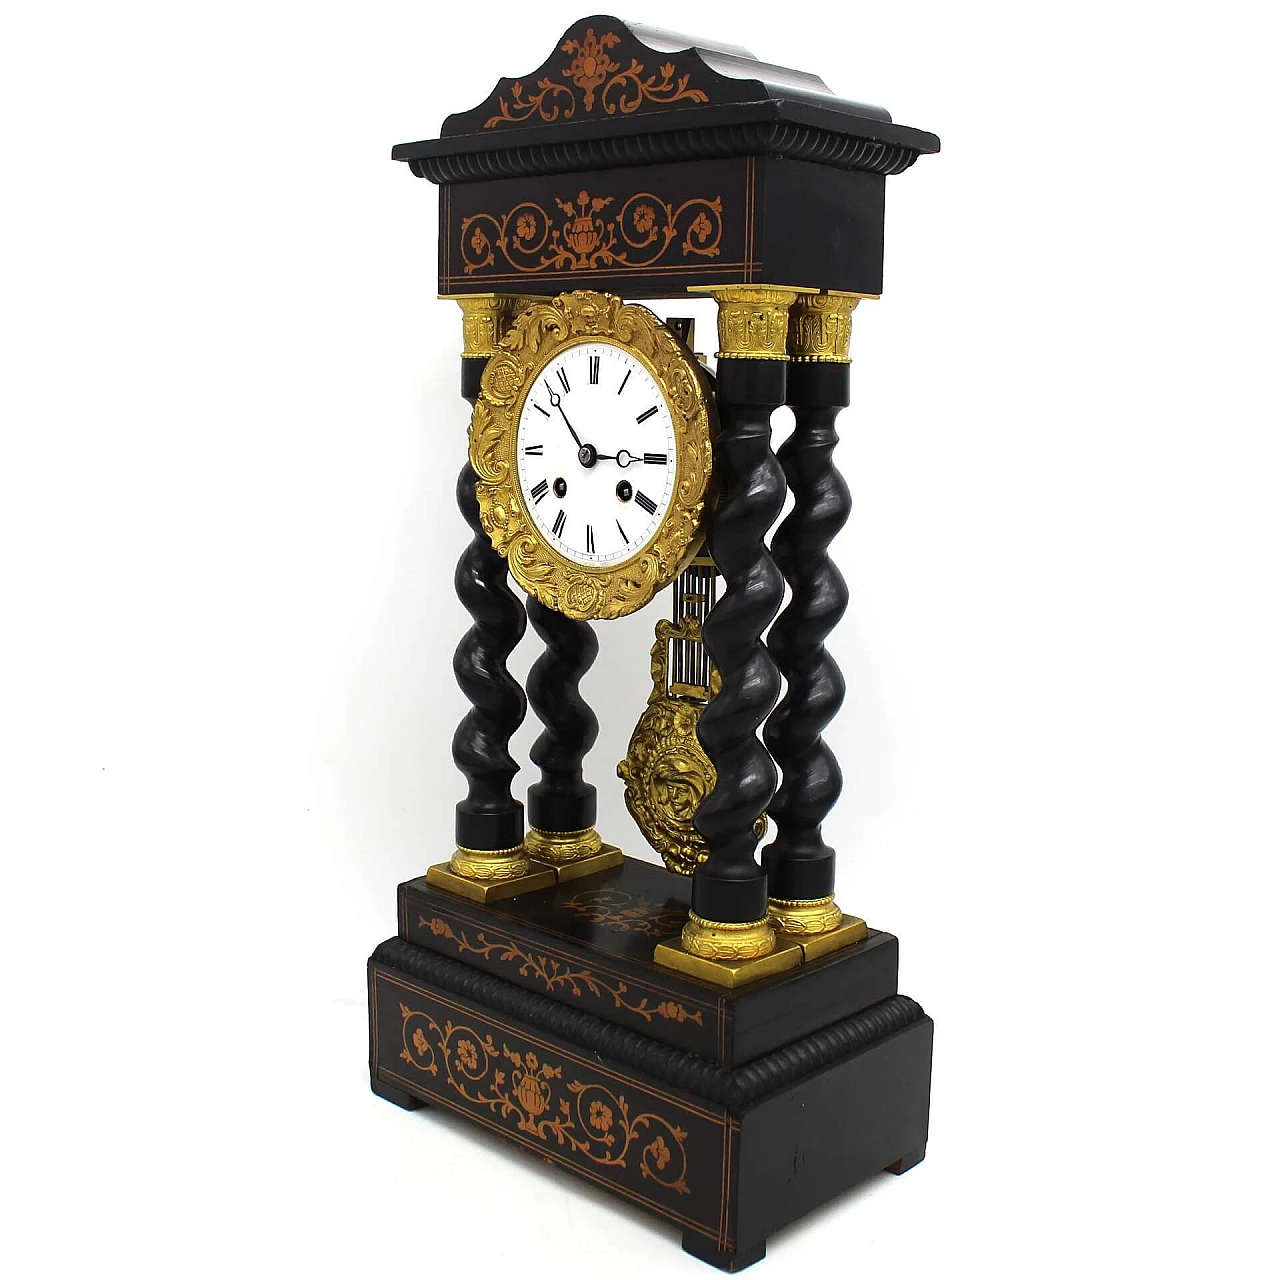 Napoleon III pendulum clock in inlaid ebonized wood and bronze, 19th century 1254241